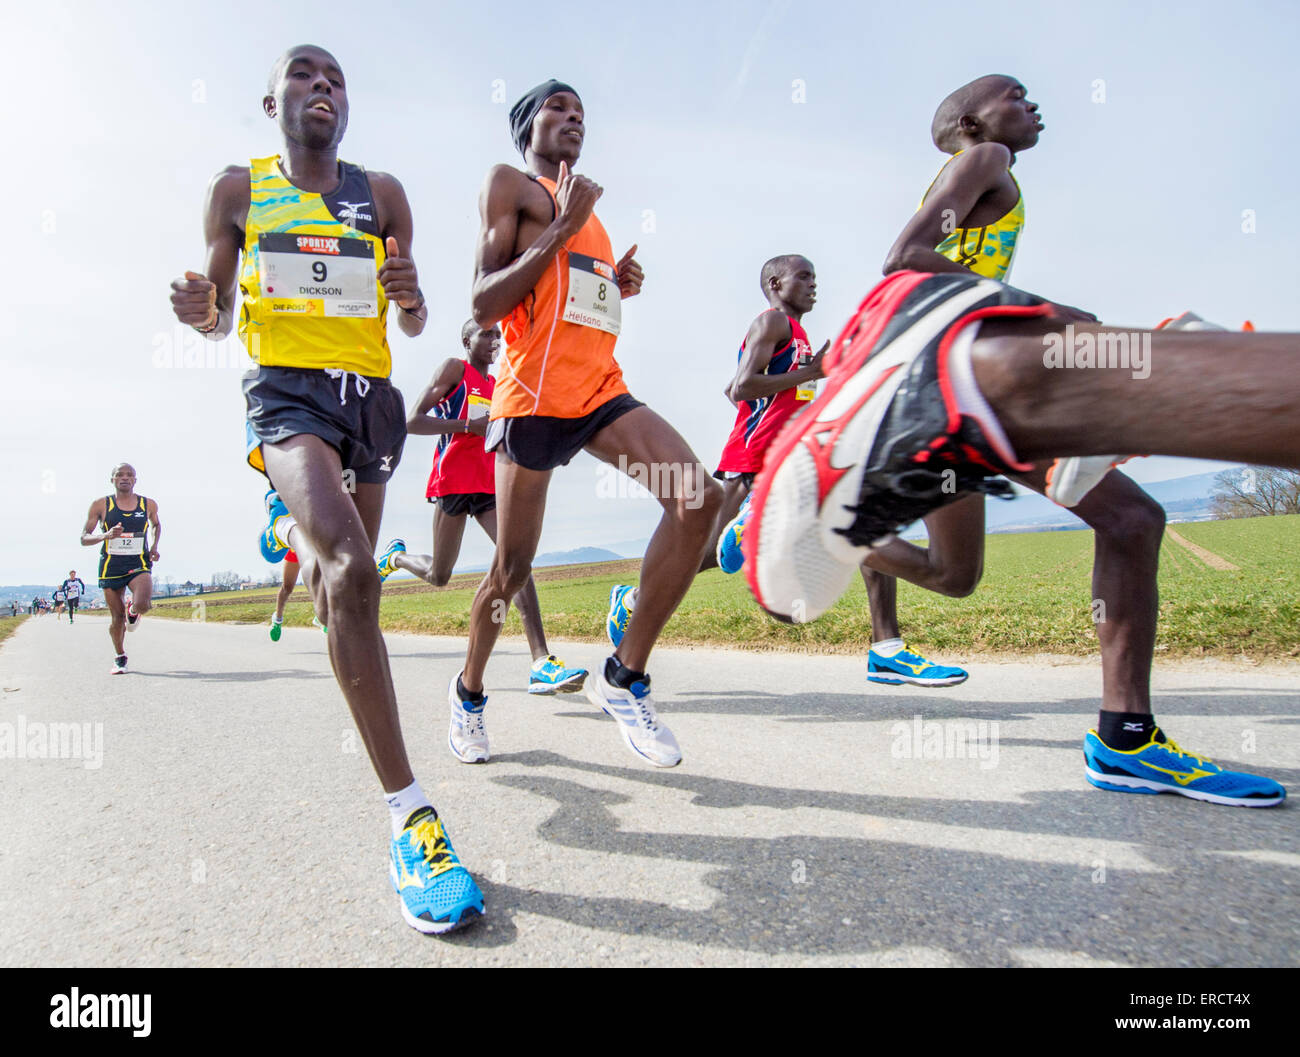 Man long-distance running race Stock Photo - Alamy